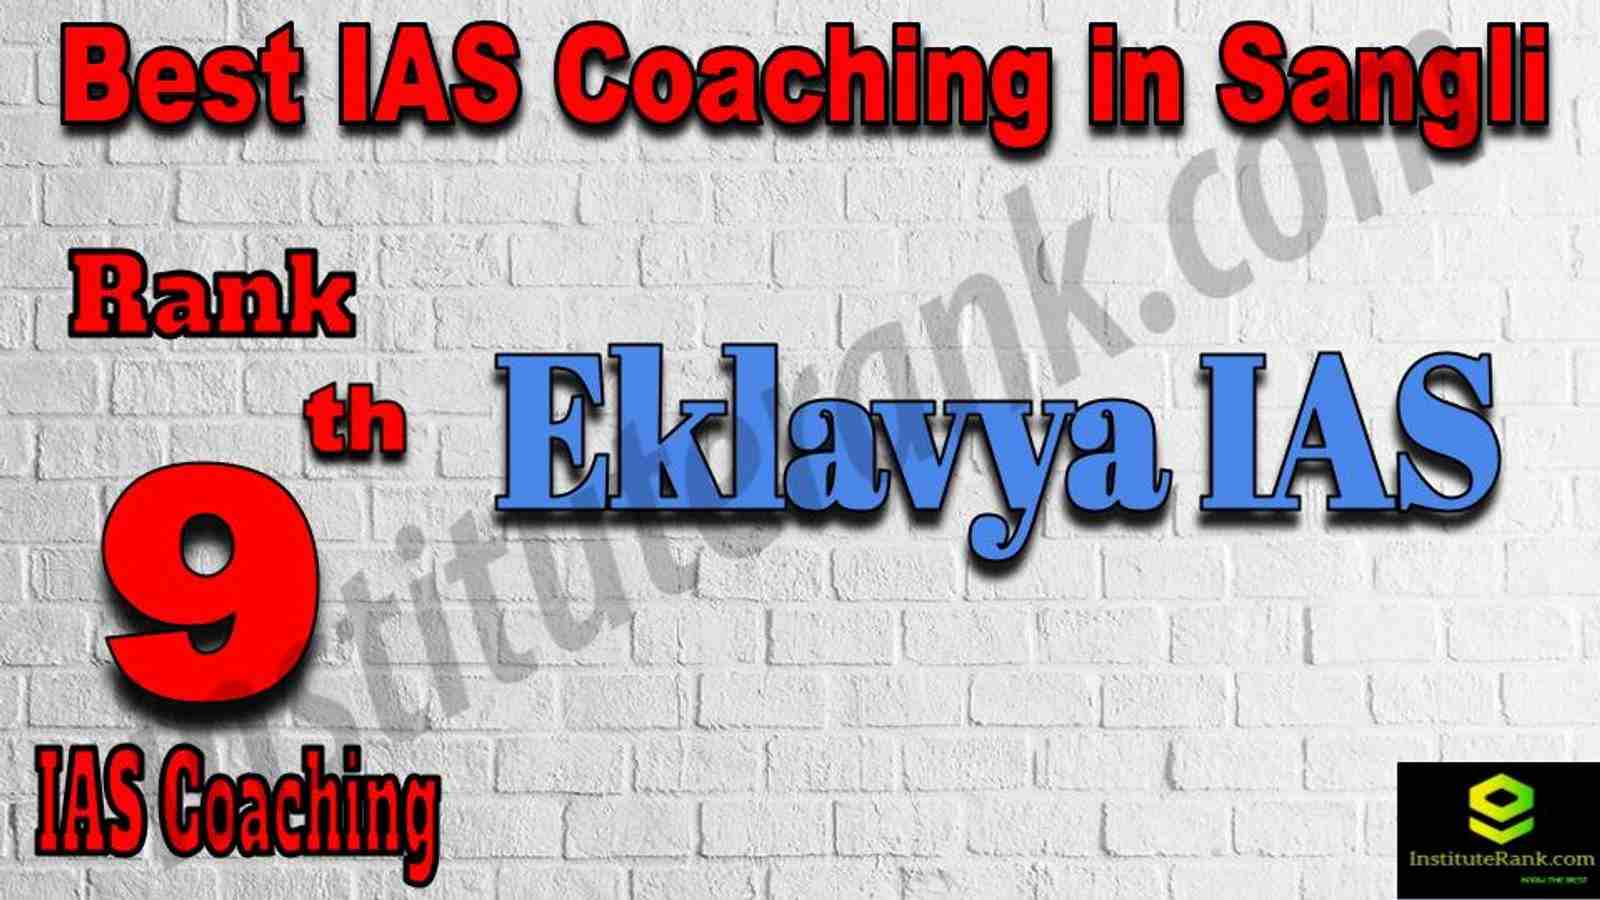 9th Best IAS Coaching in Sangli